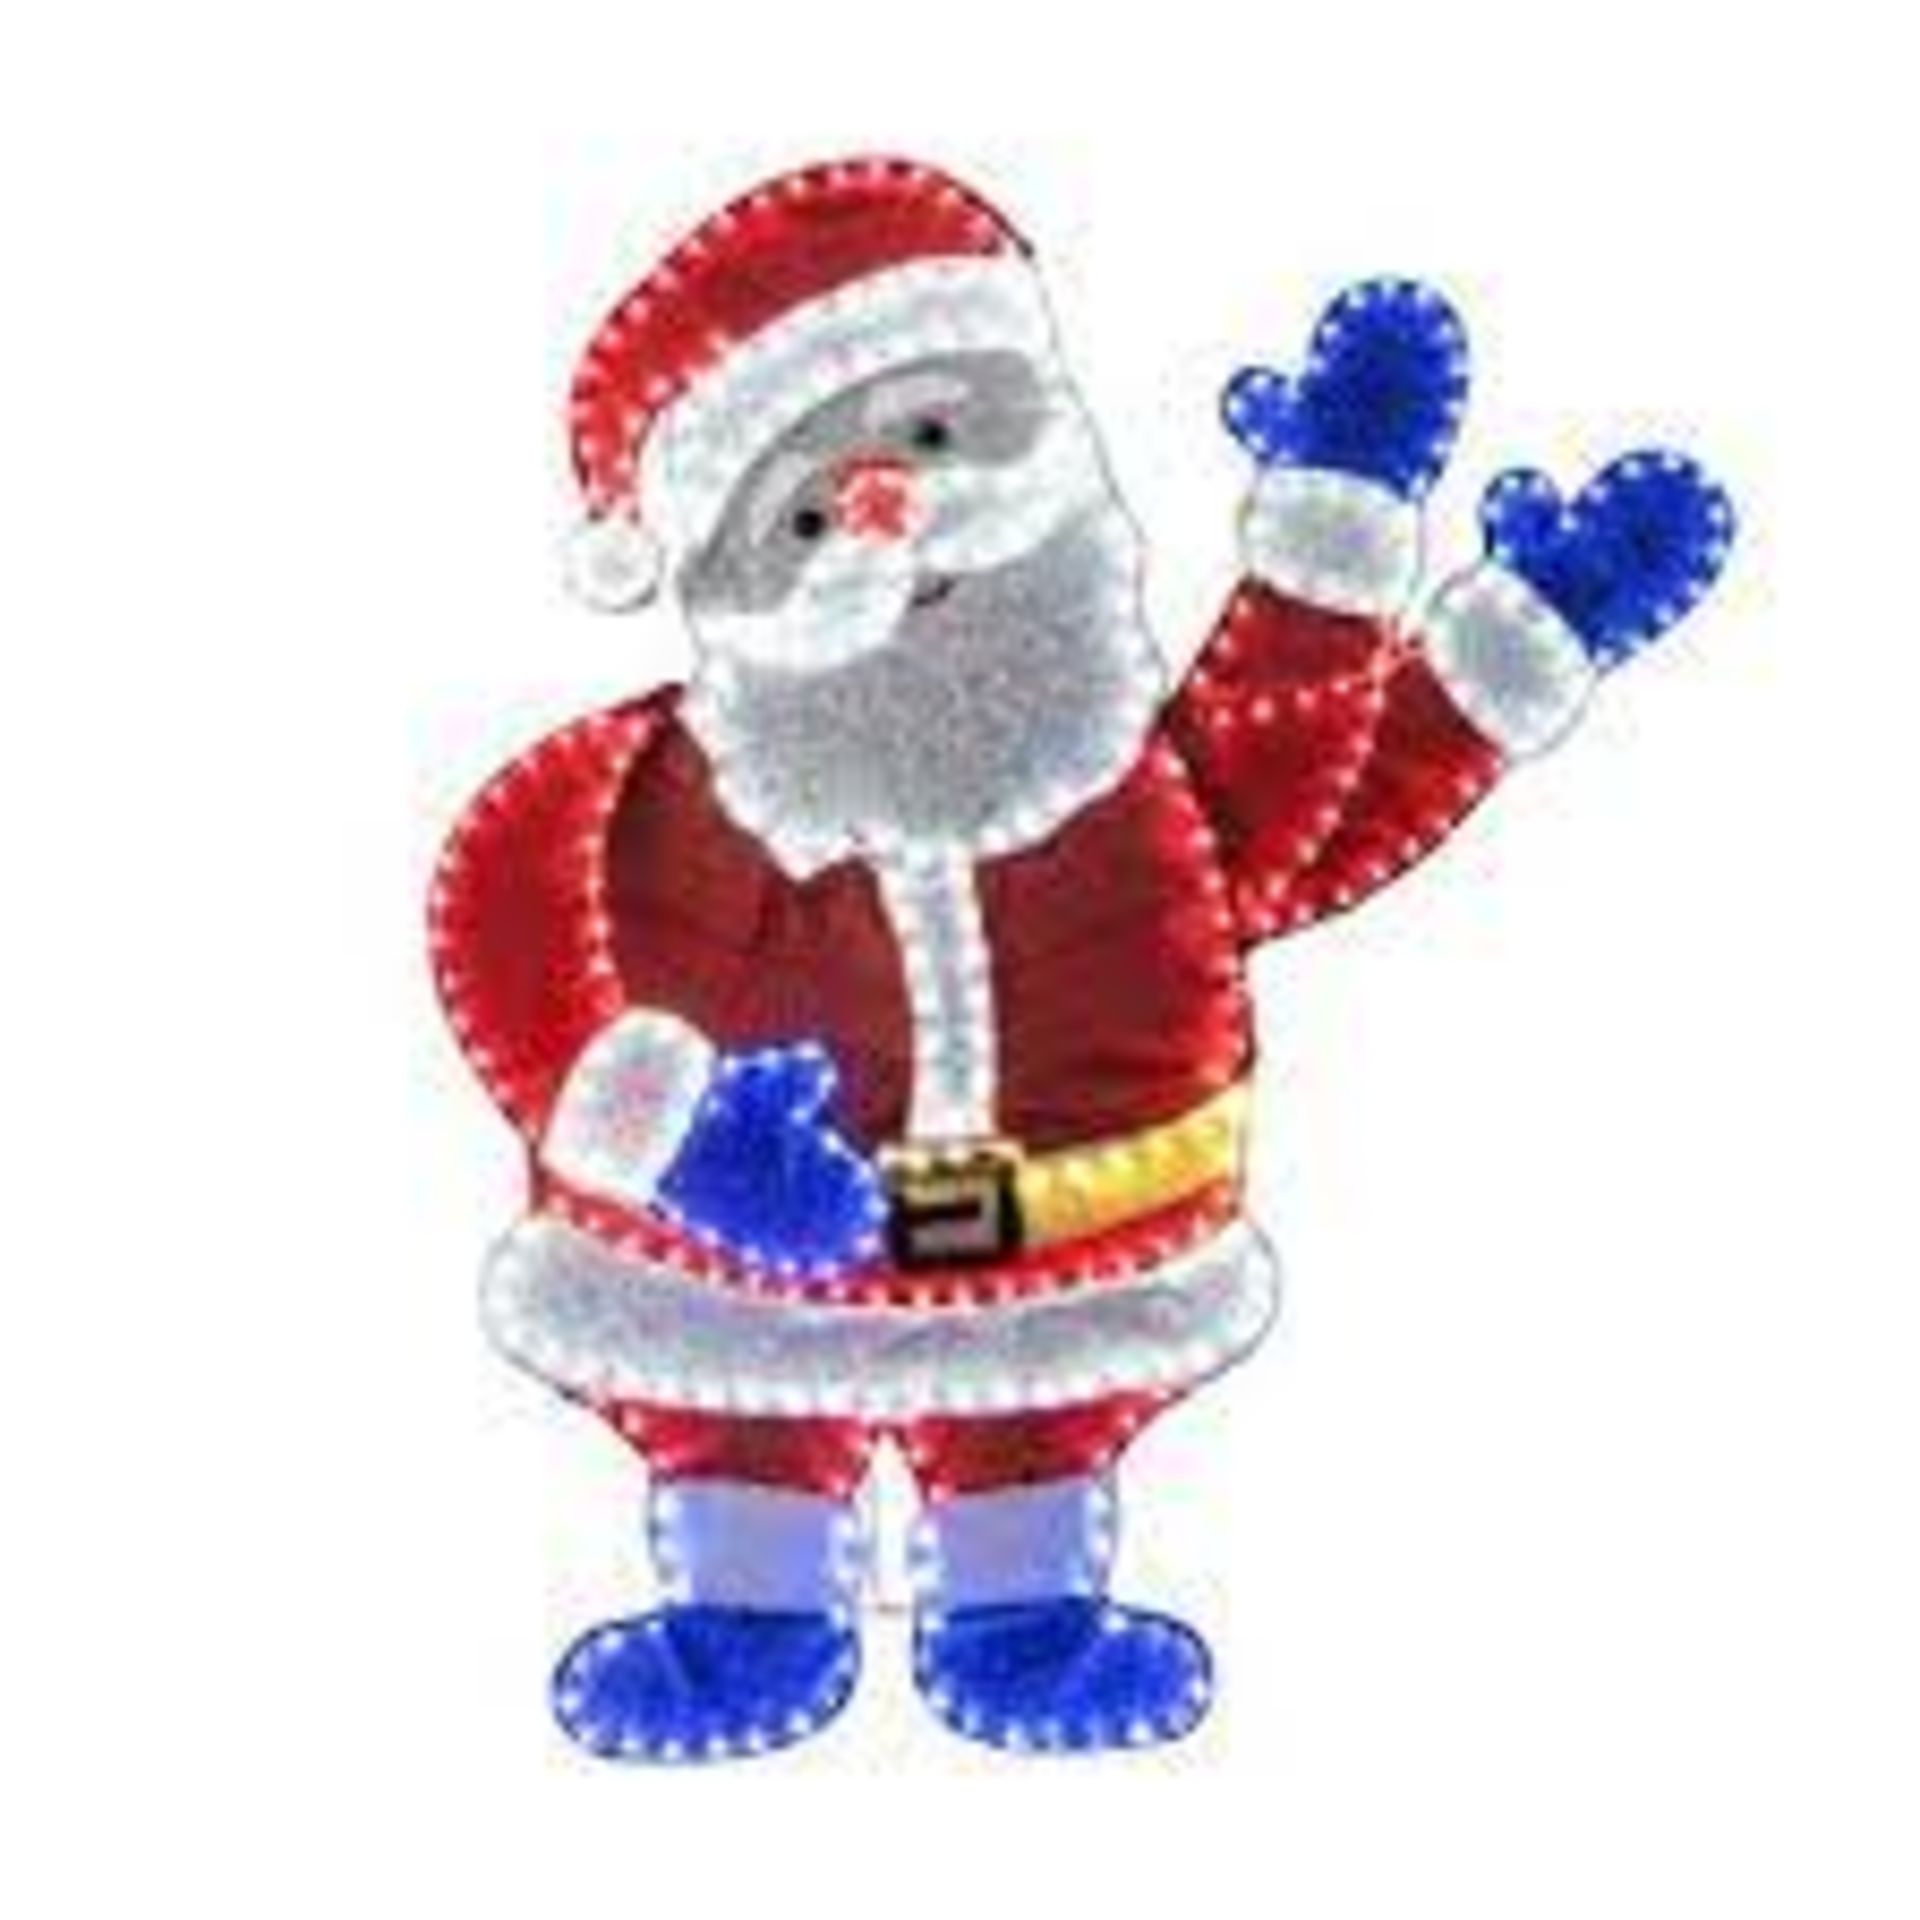 125 CM Pre-Lit Xmas Santa Claus Figure. -R13.16. With its waving arms, bright color, and vivid